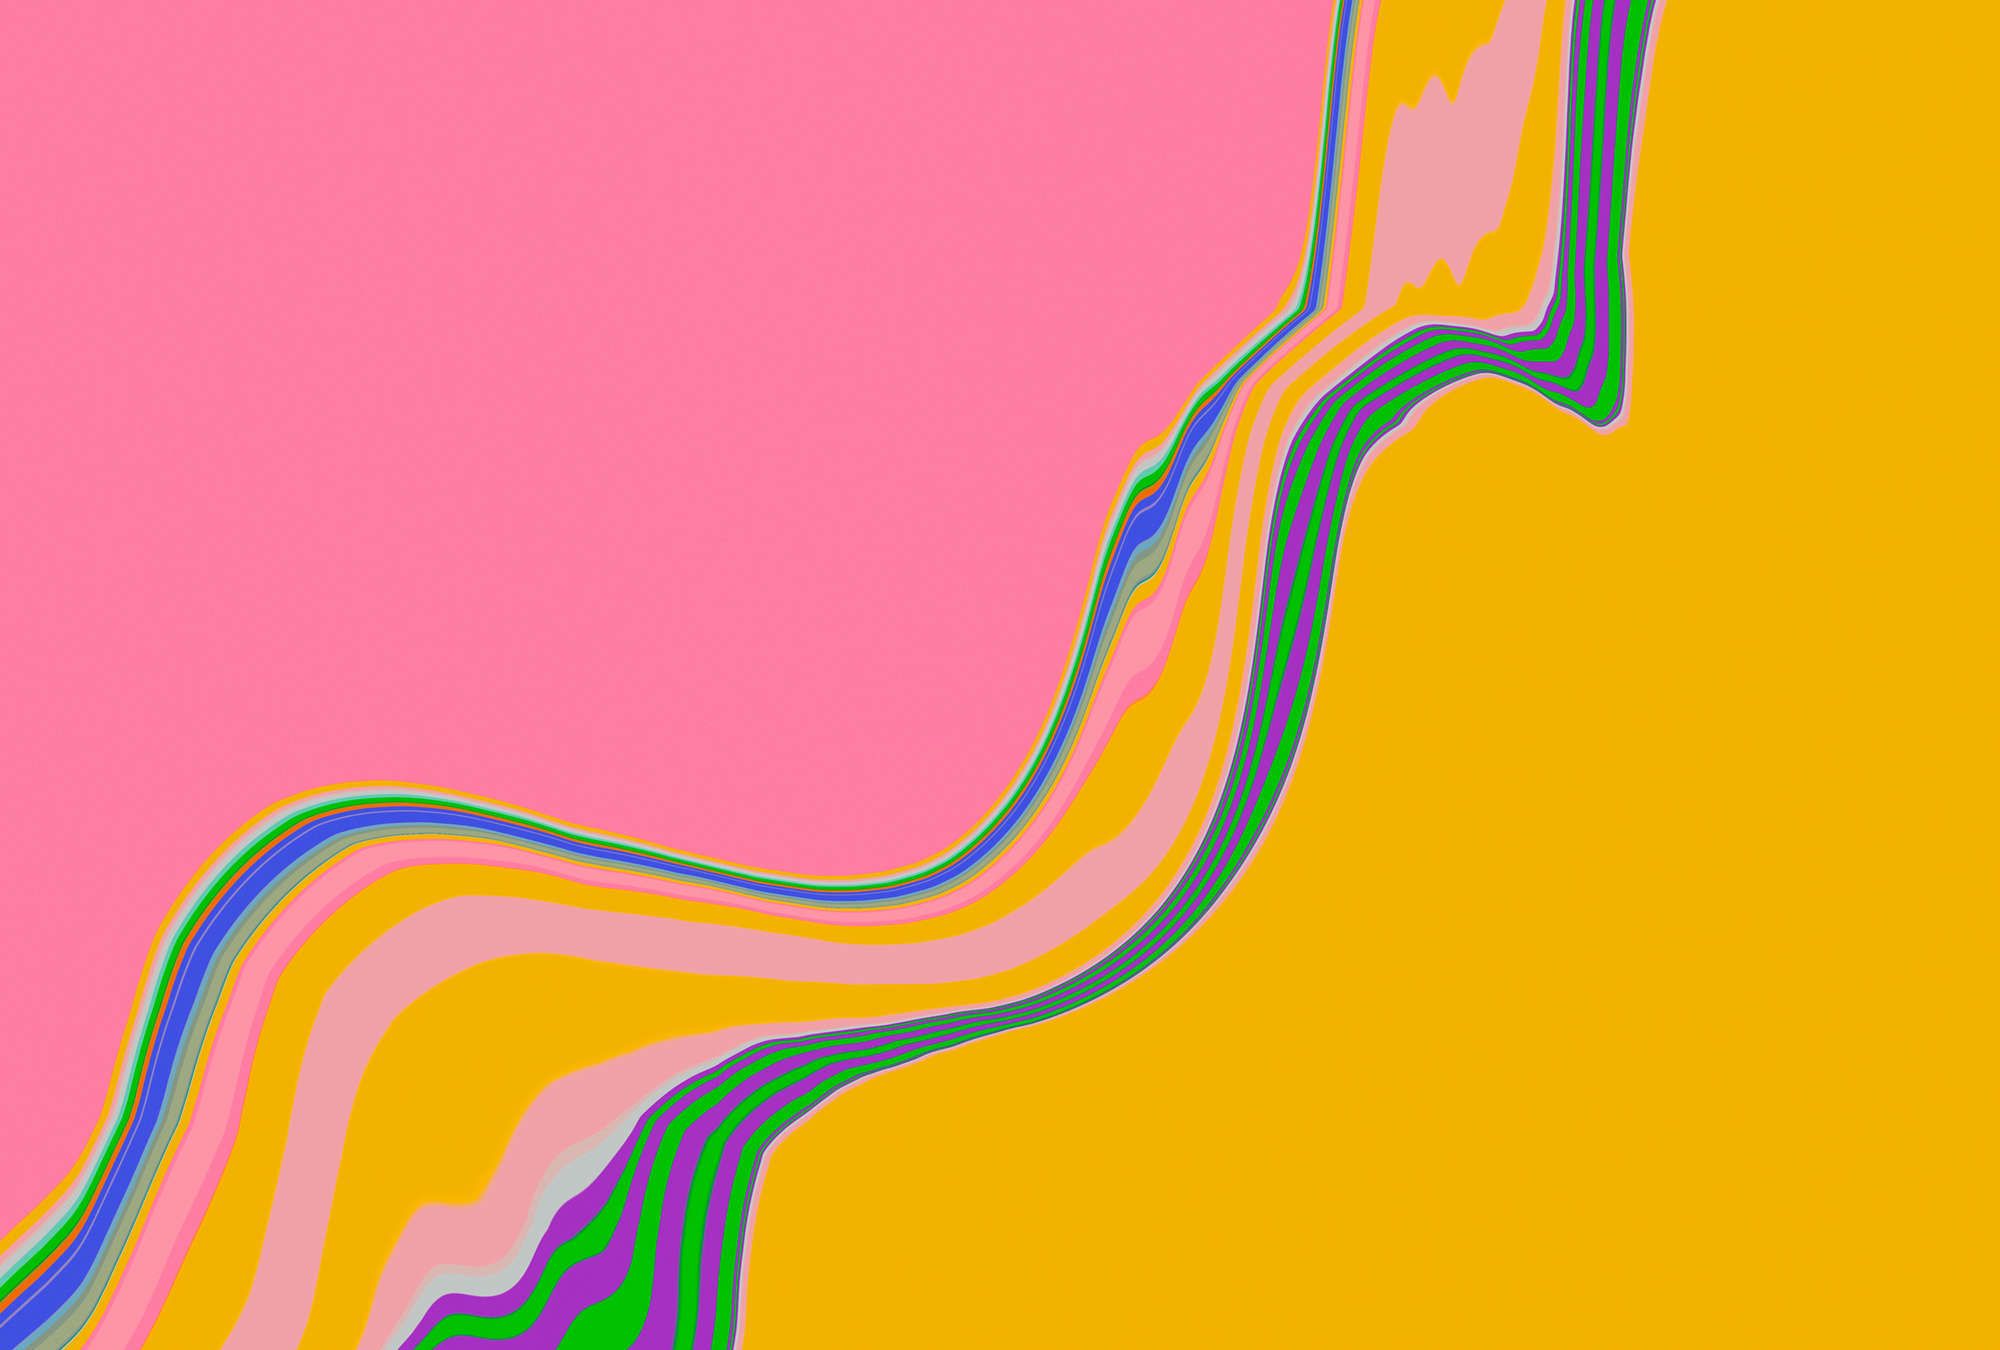             Digital behang »nexus« - Abstract golfontwerp - Roze, Oranje | Licht structuurvlies
        